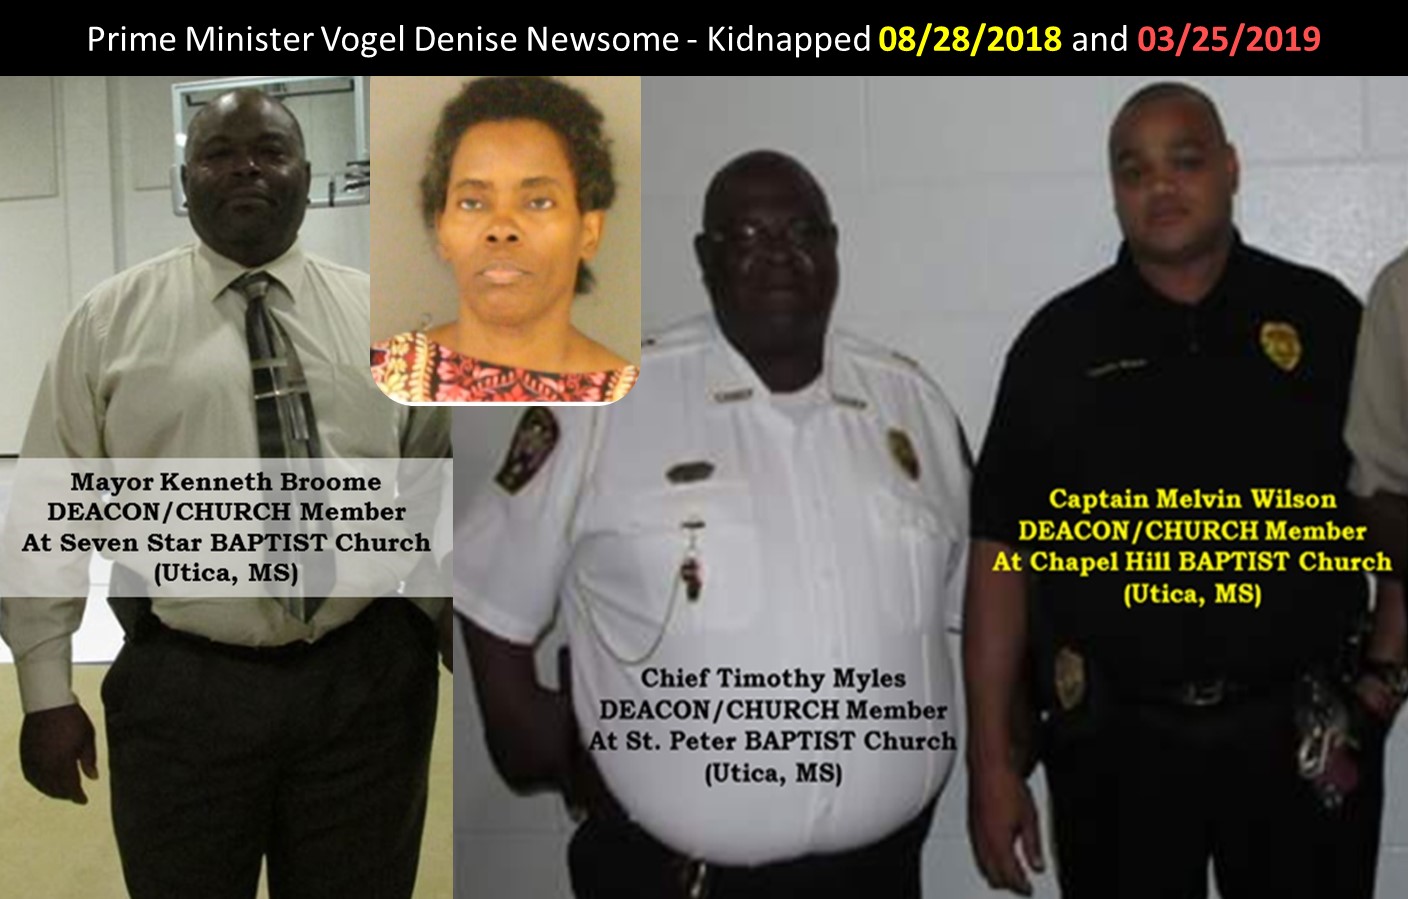 082818 Kidnapping Of Prime Minister Vogel Denise Newsome